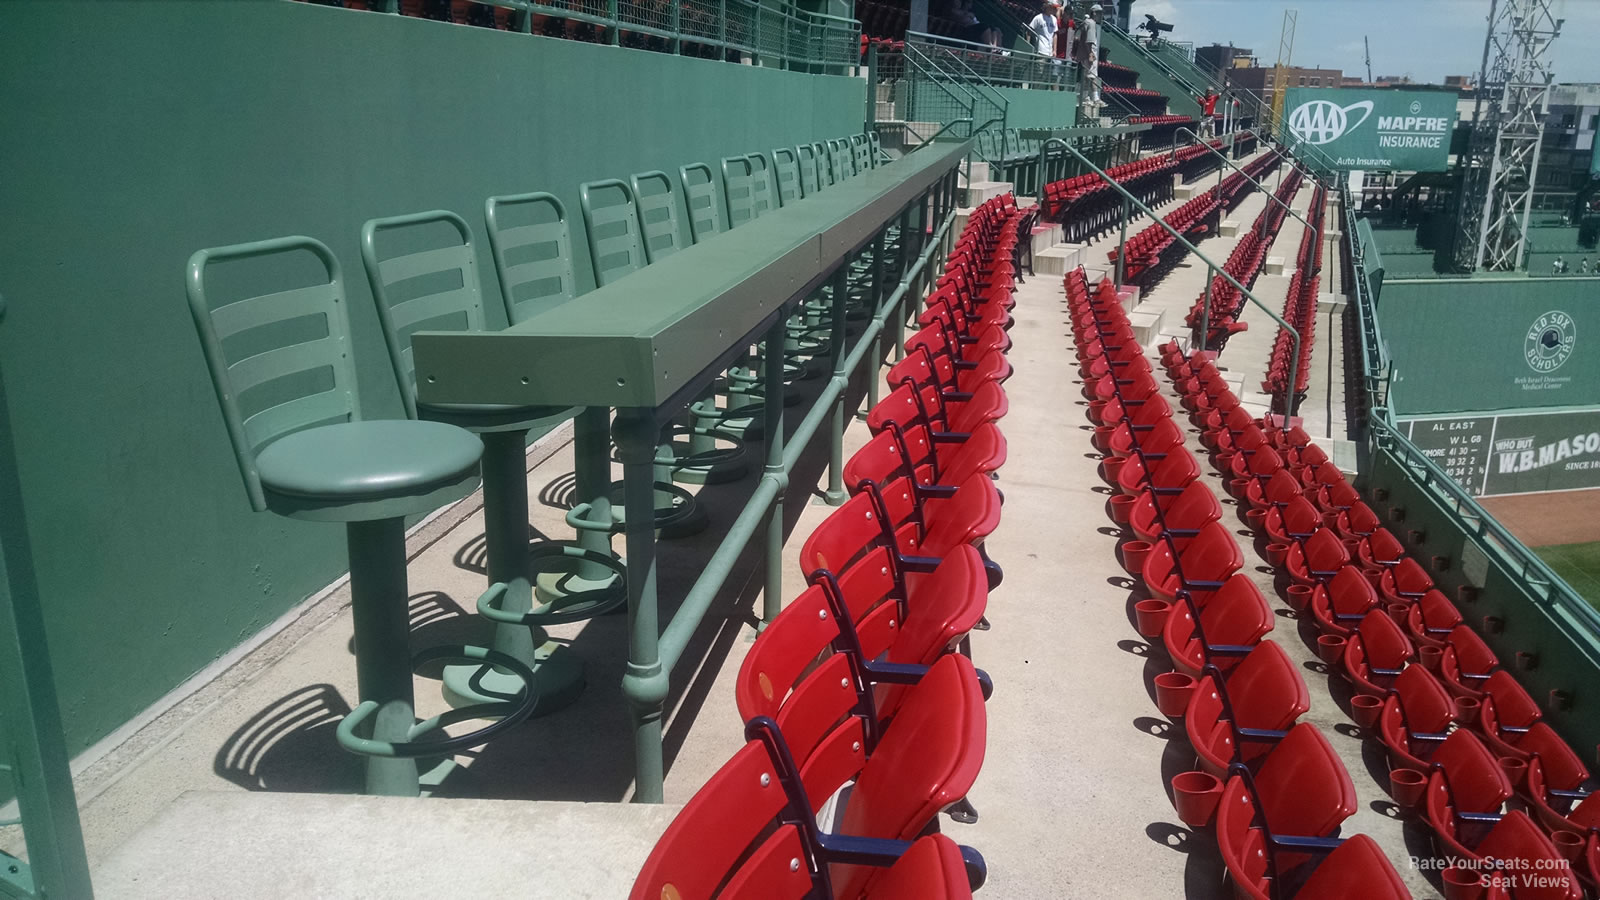 Private Club in Fenway Park Has Exclusive Red Sox Treasures